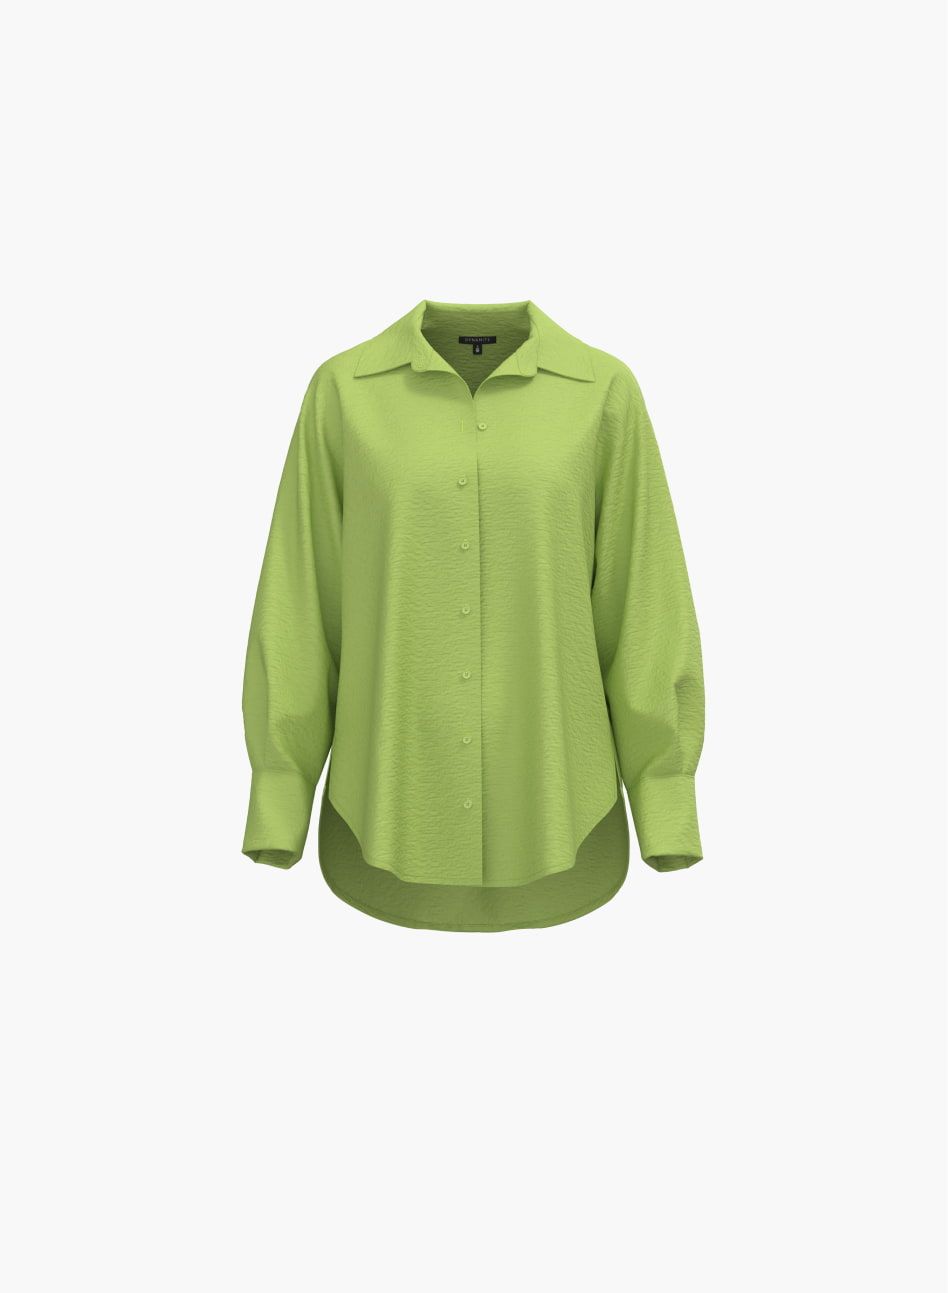 A green button down shirt